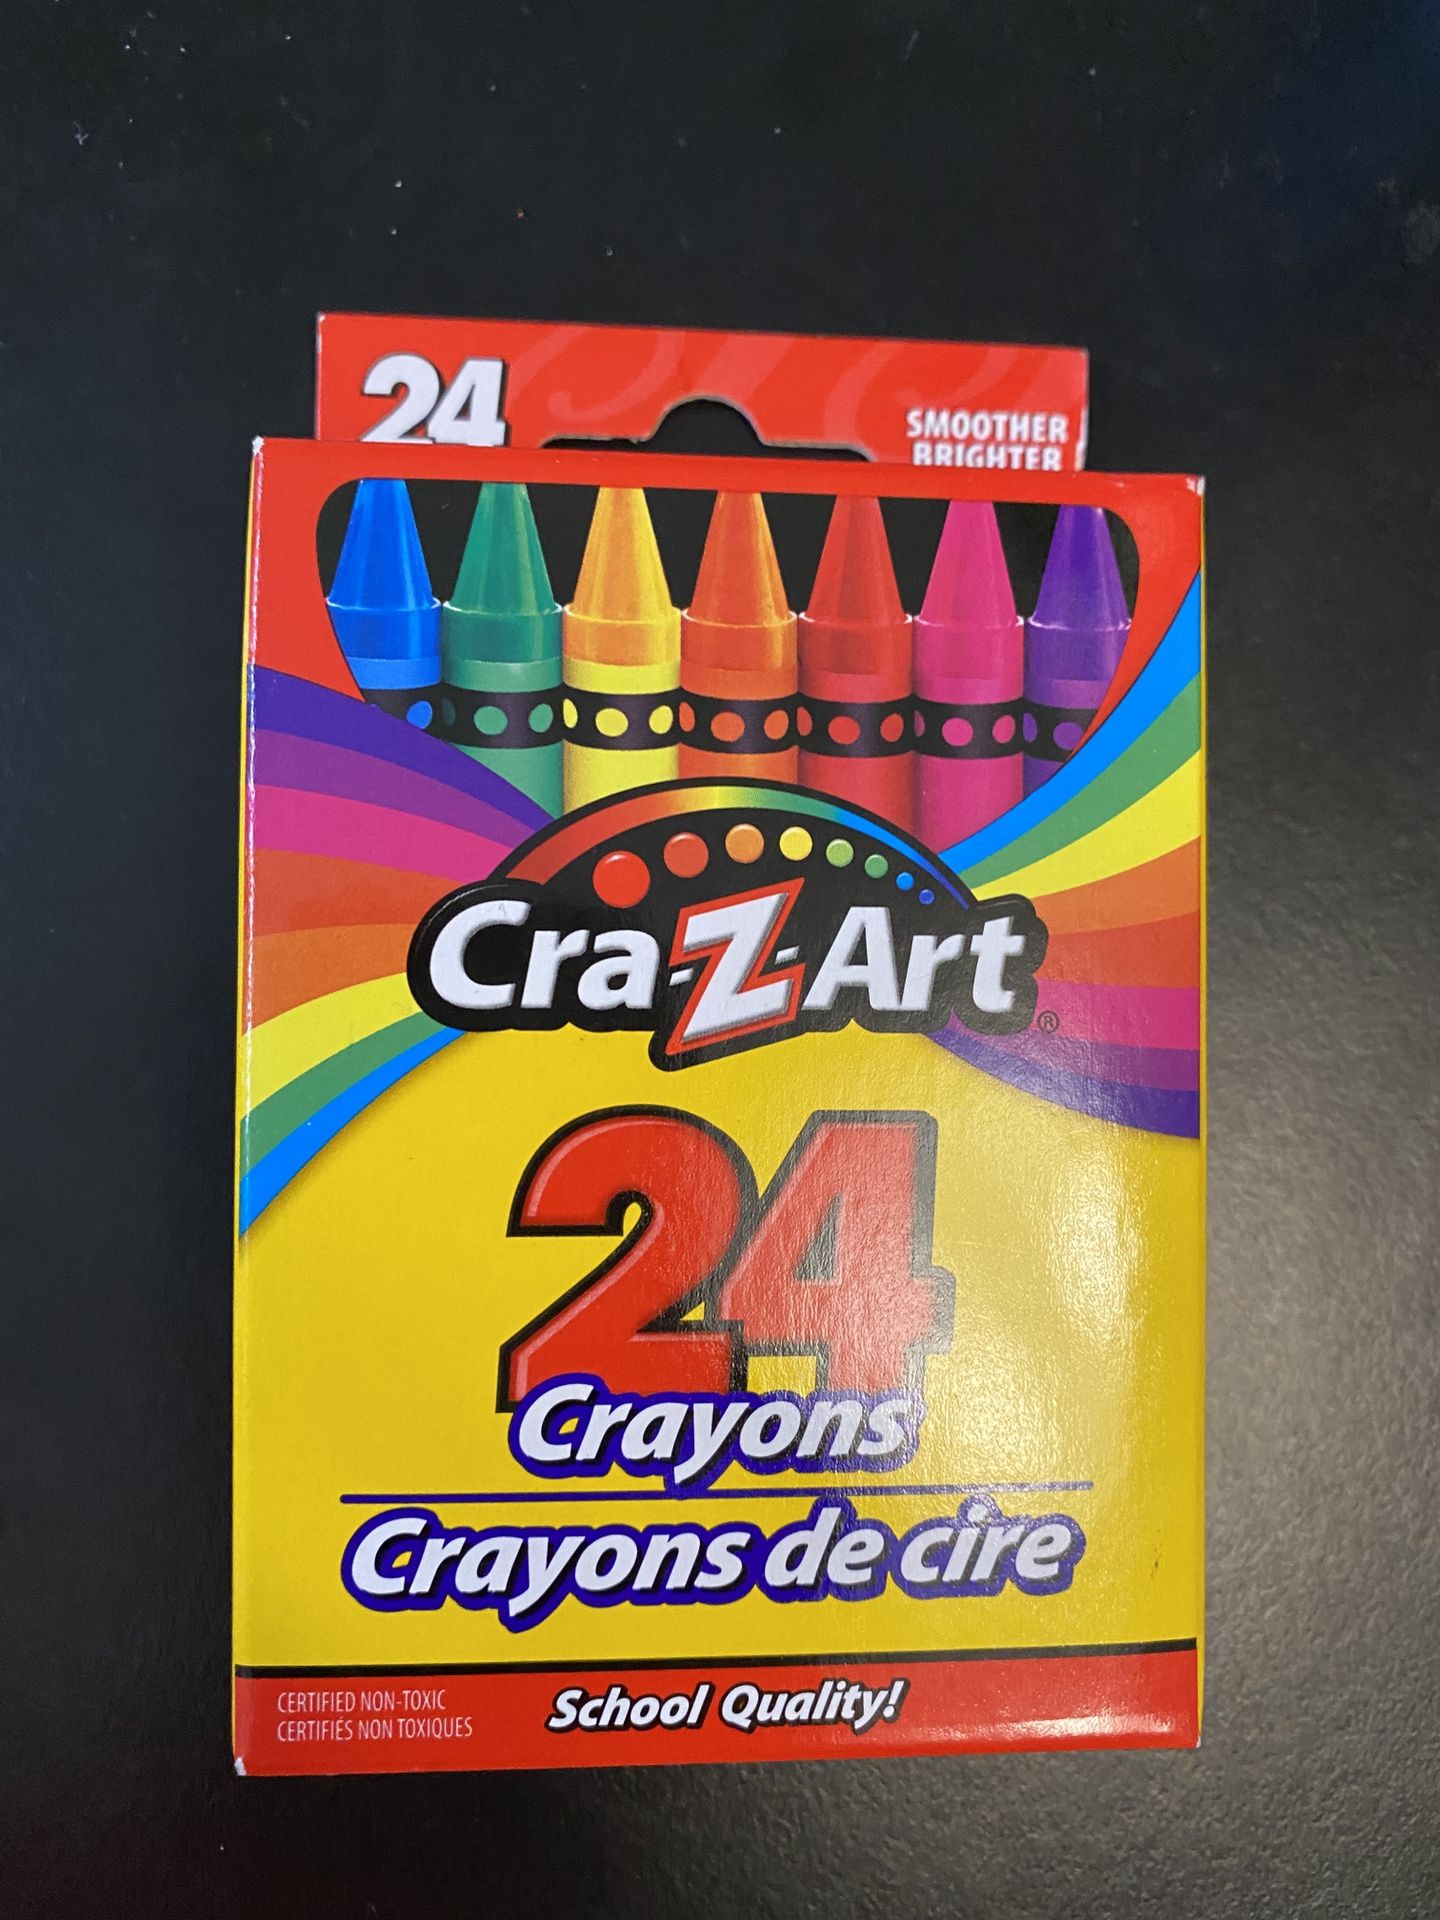 CraZArt 24 crayons